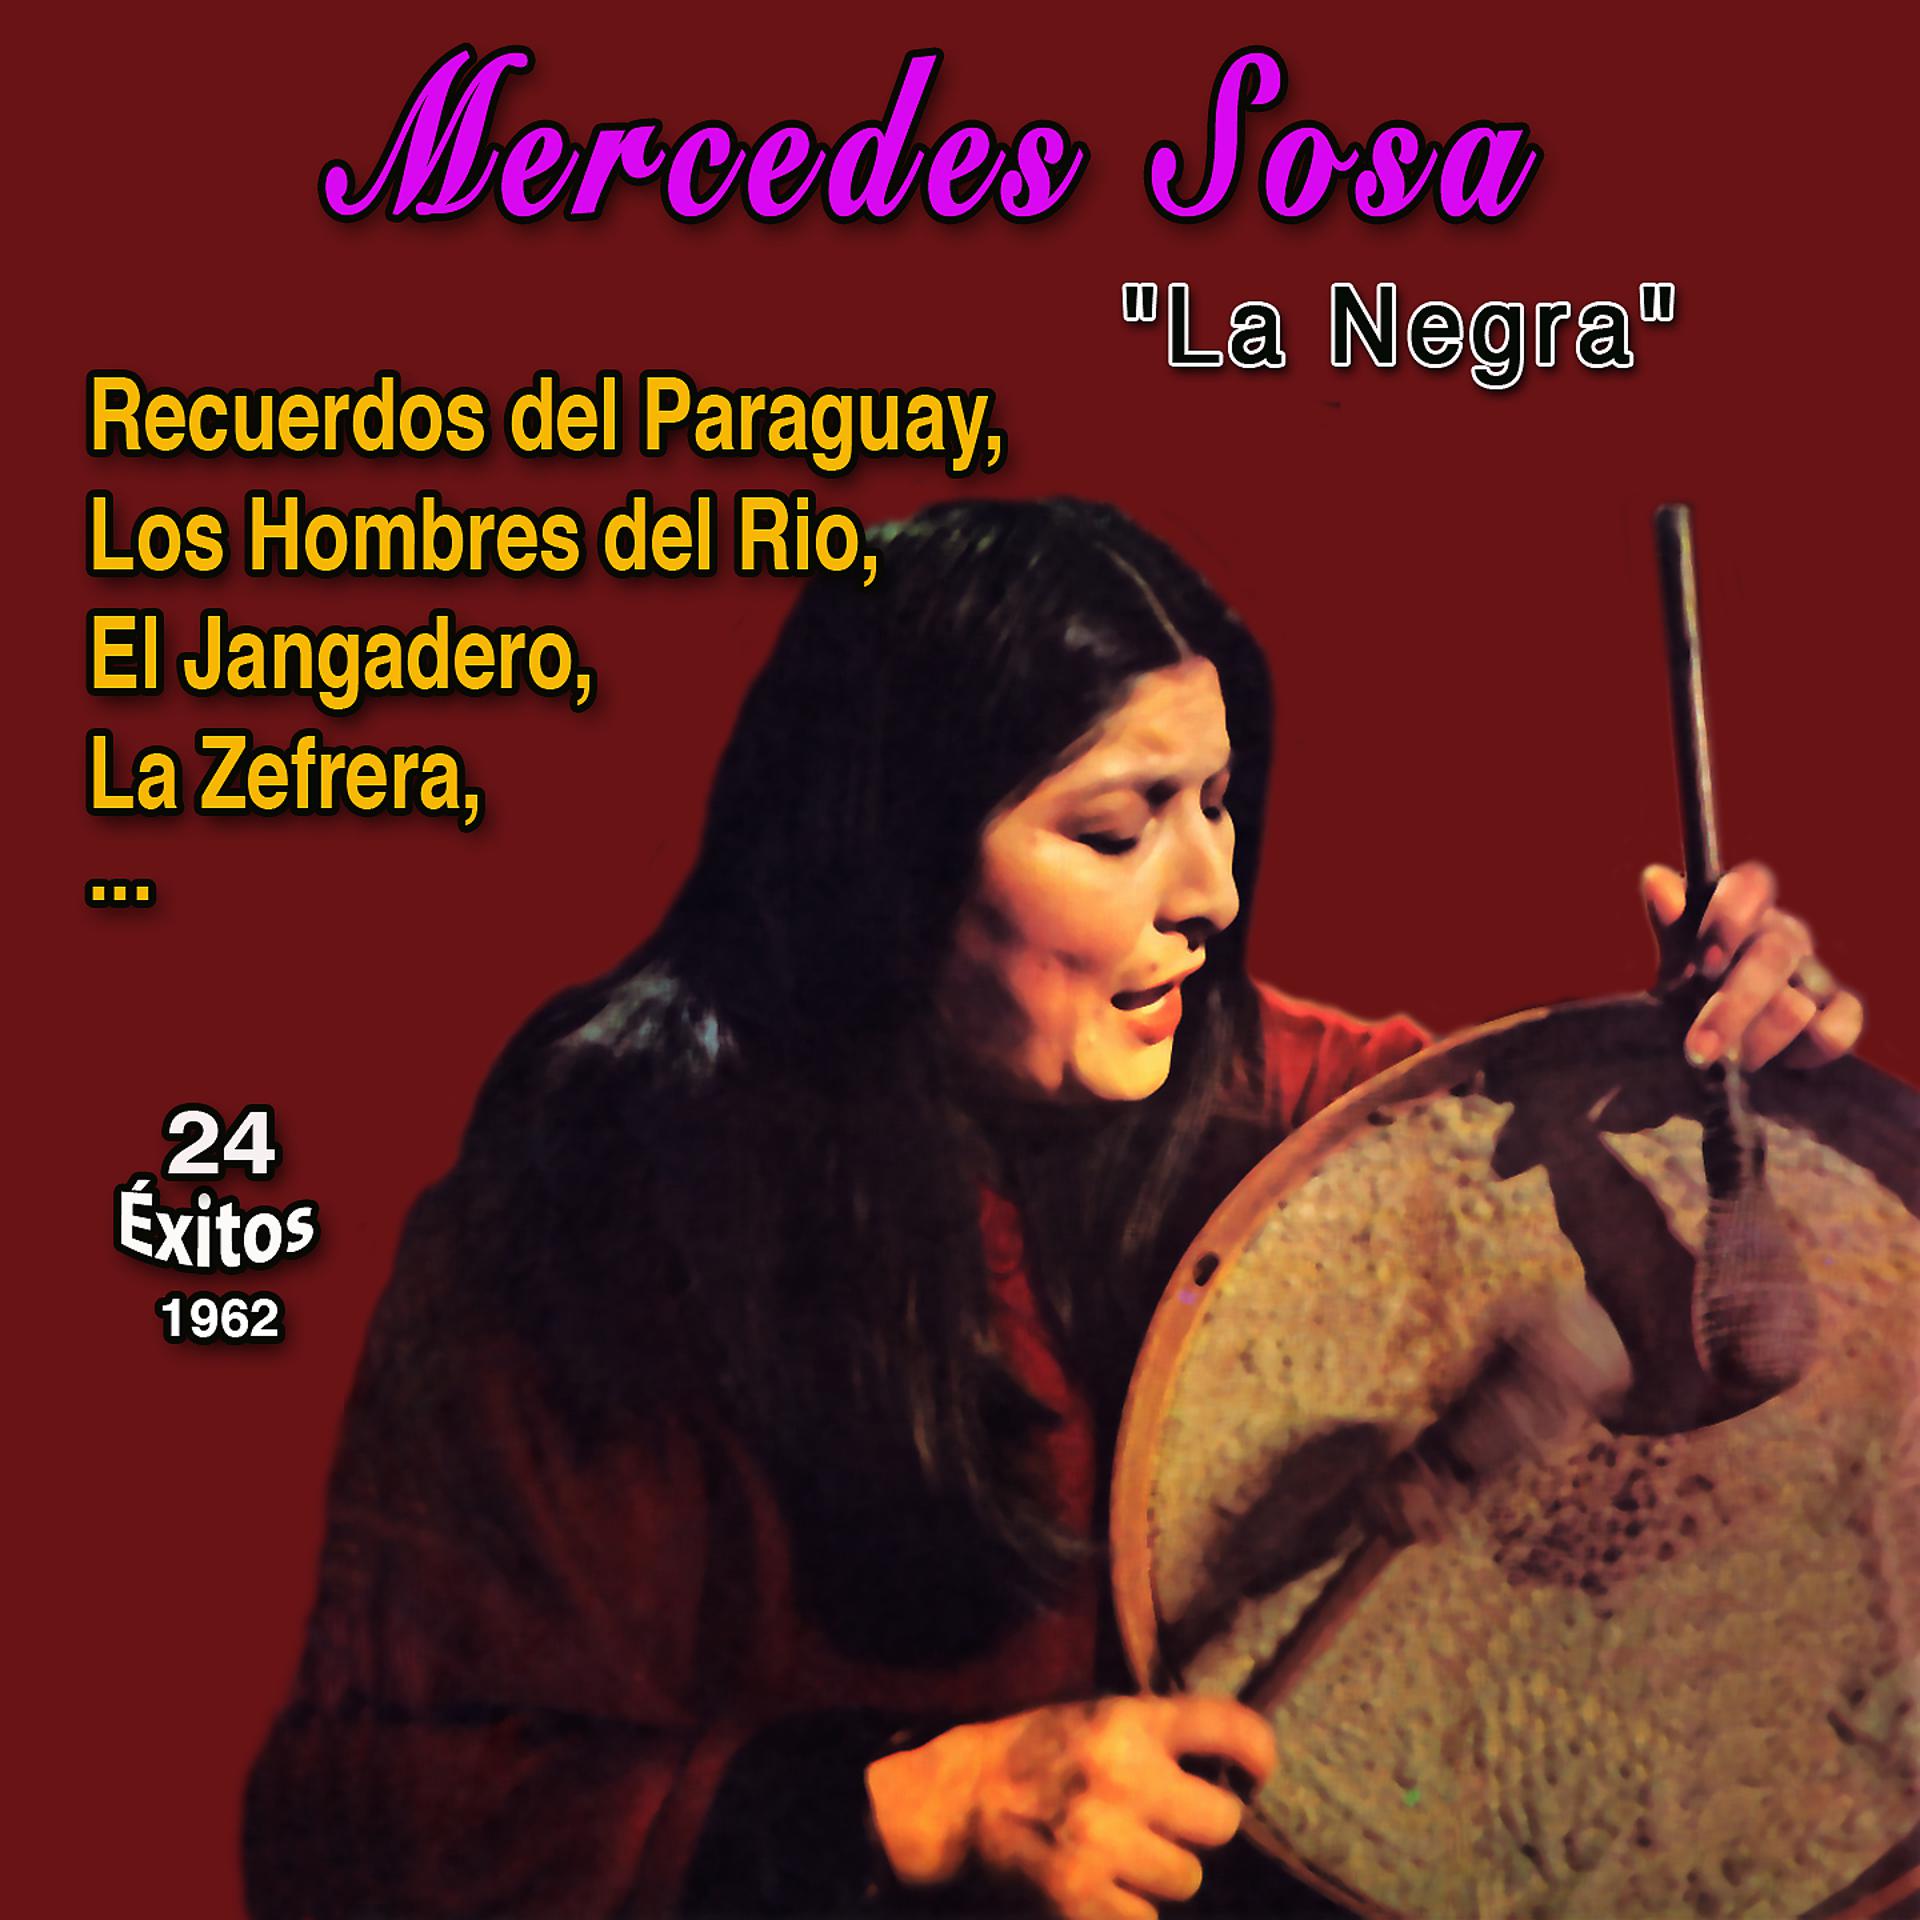 Постер альбома "La Negra" Mercedes Sosa